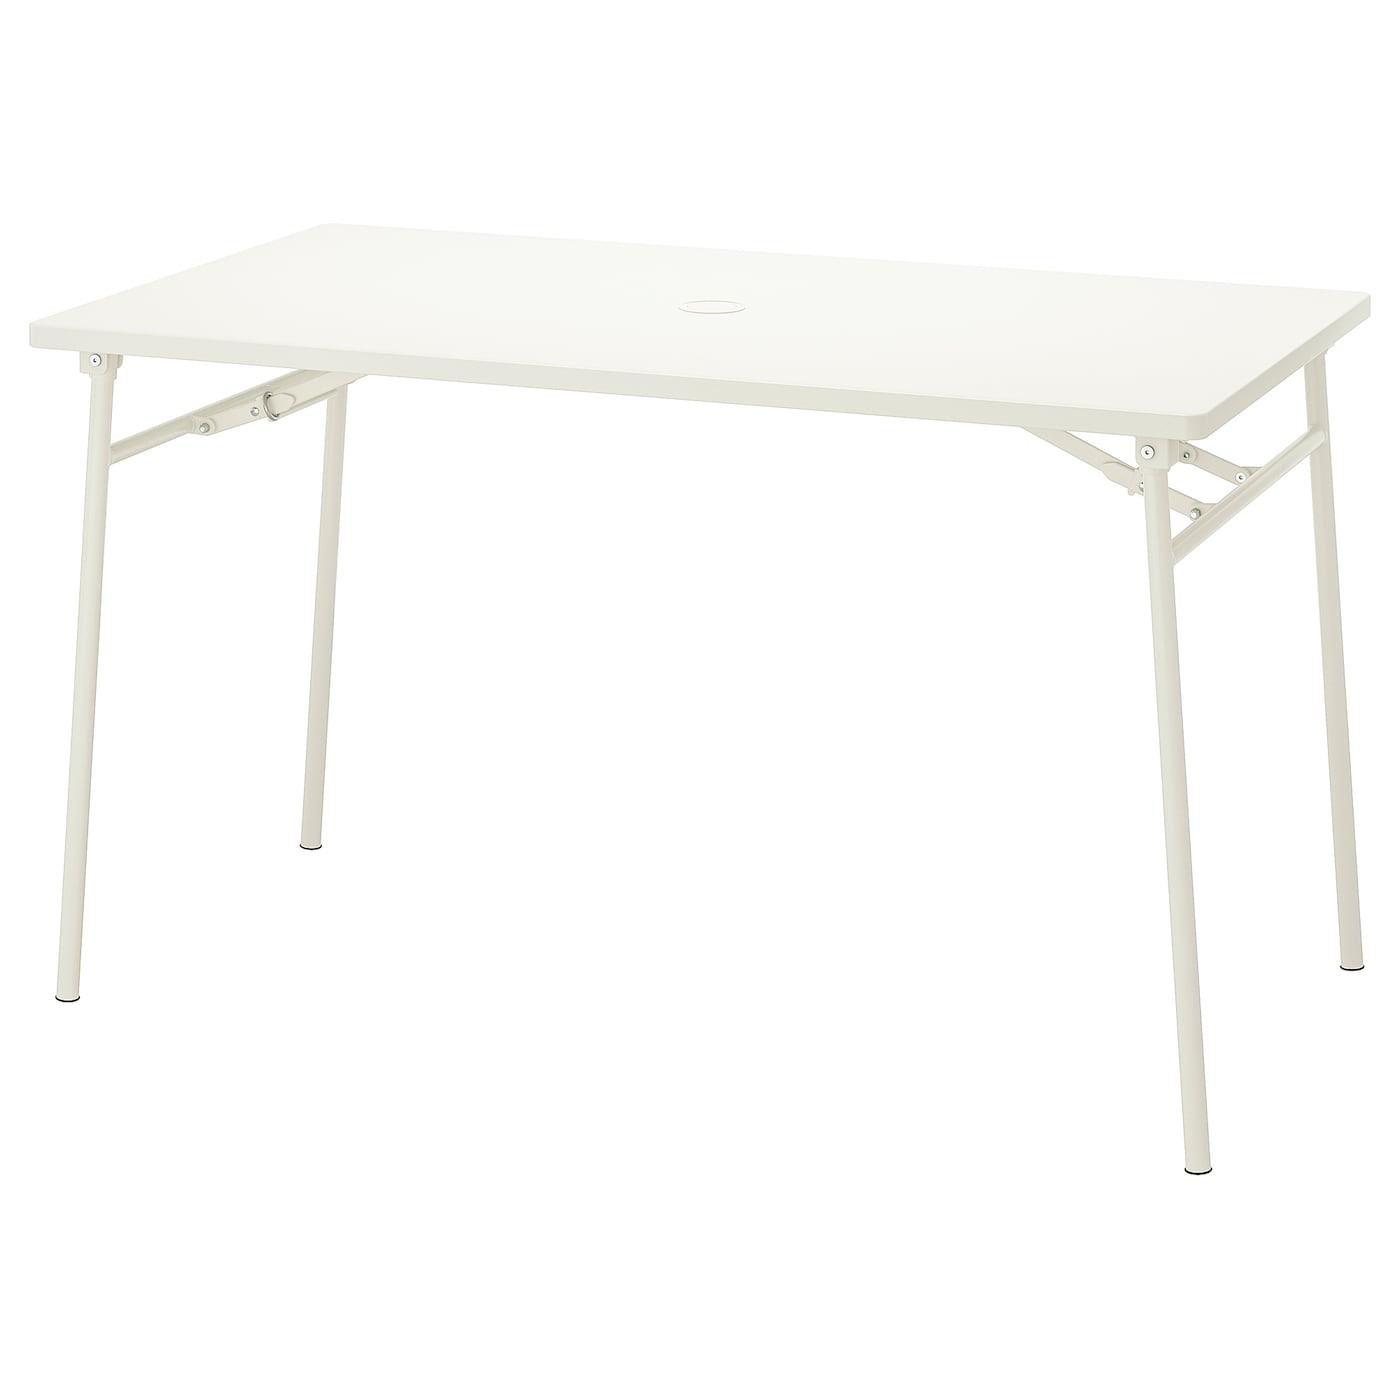 Стол садовый - IKEA TORPARÖ/TORPARO, 75x130x74 см, белый, ТОРПАРЁ ИКЕА